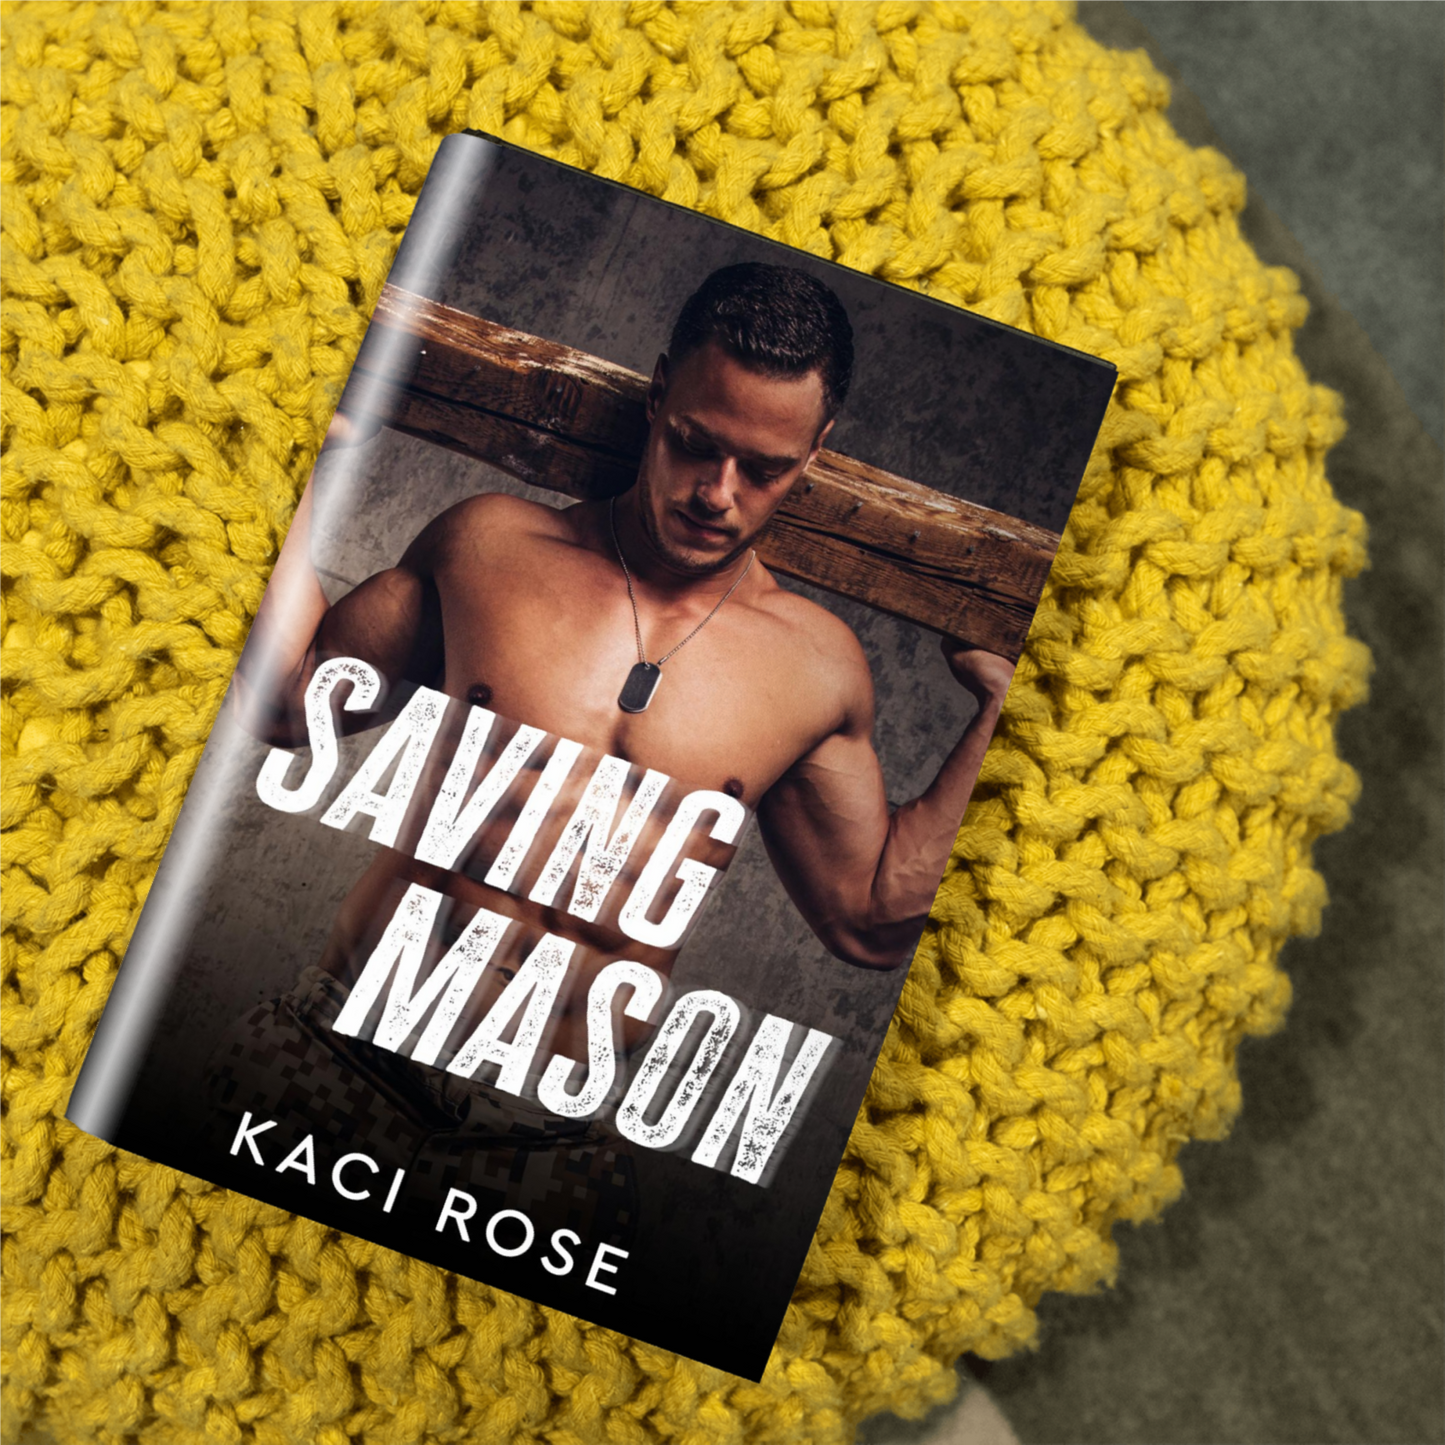 Saving Mason Novella (EBOOK)